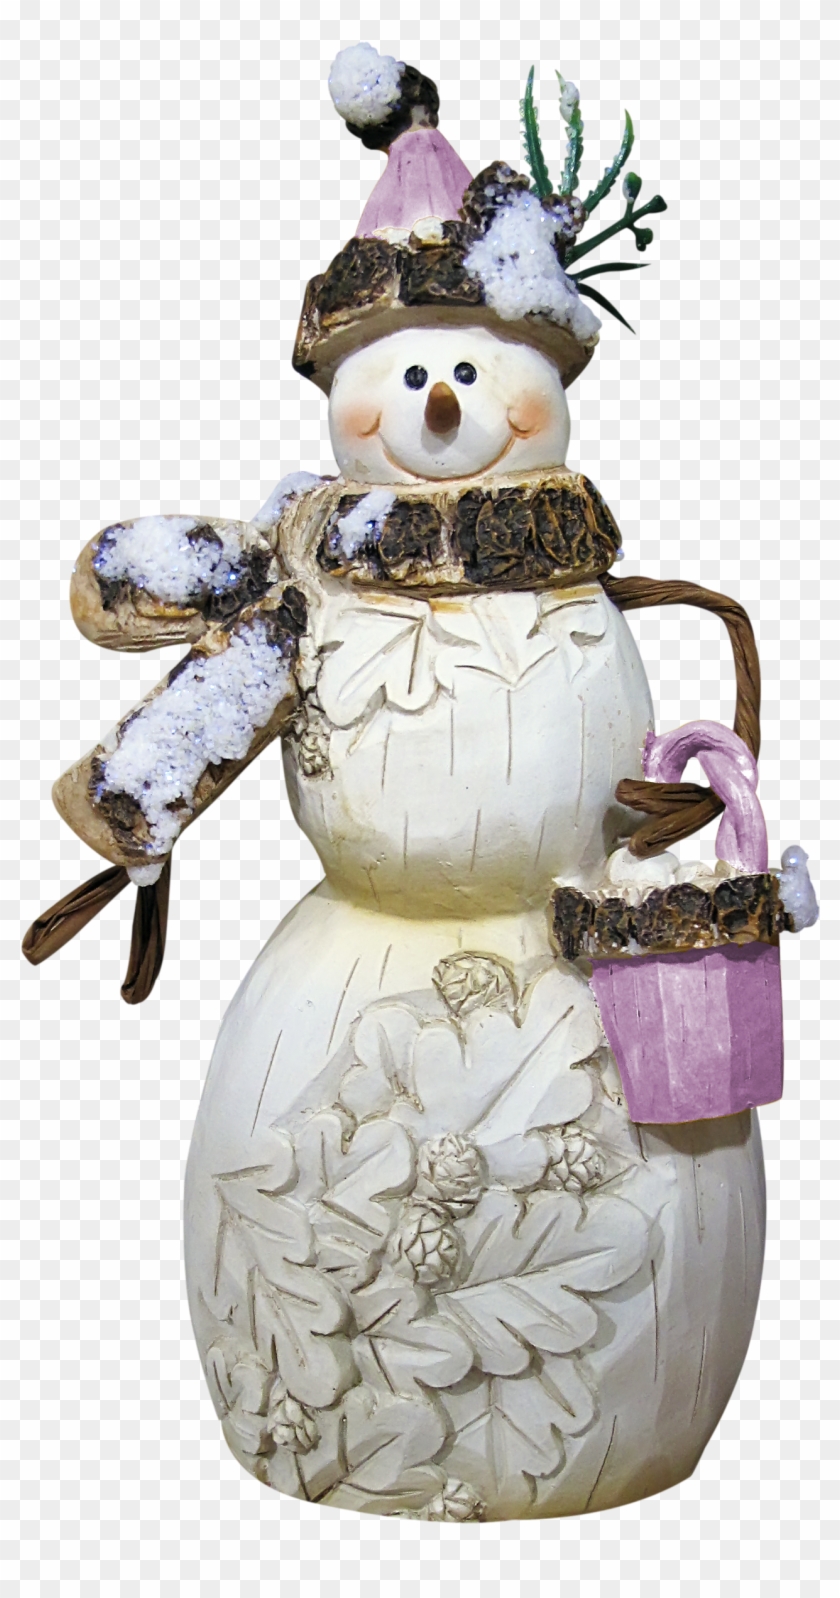 Snowman Christmas Clip Art - Snowman Christmas Clip Art #741524